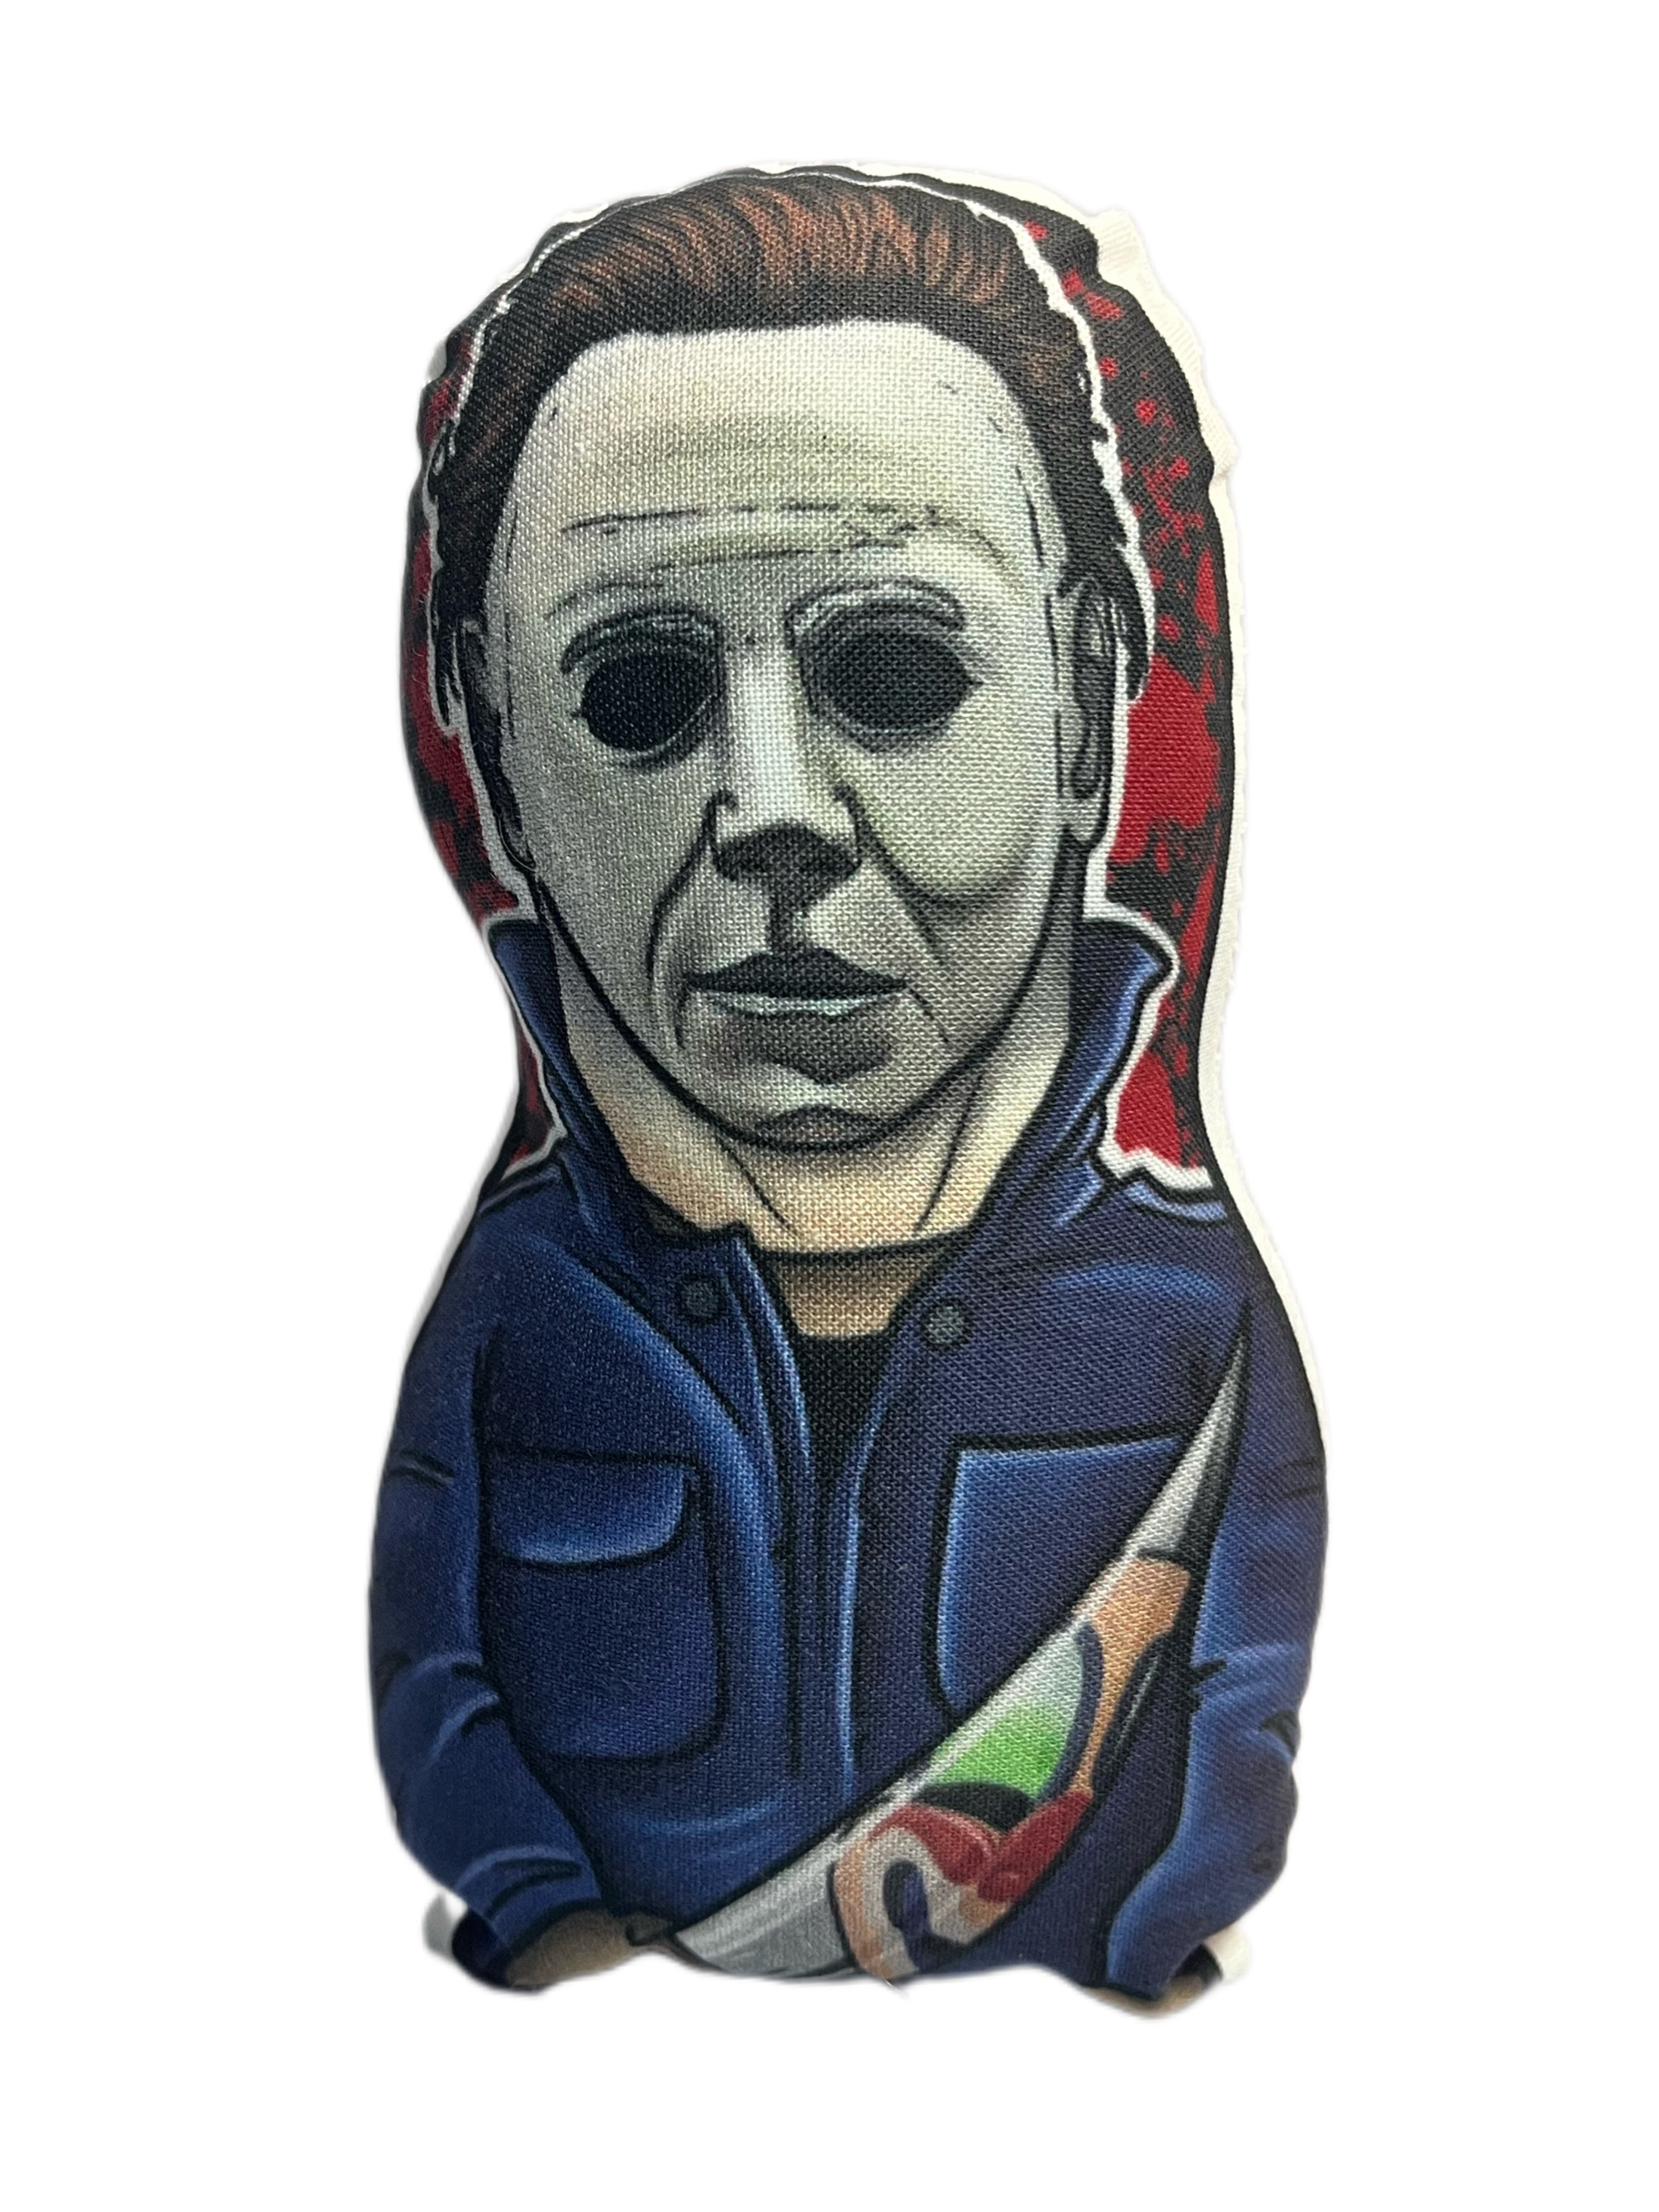 Halloween Michael Myers Inspired 5" Plush Doll